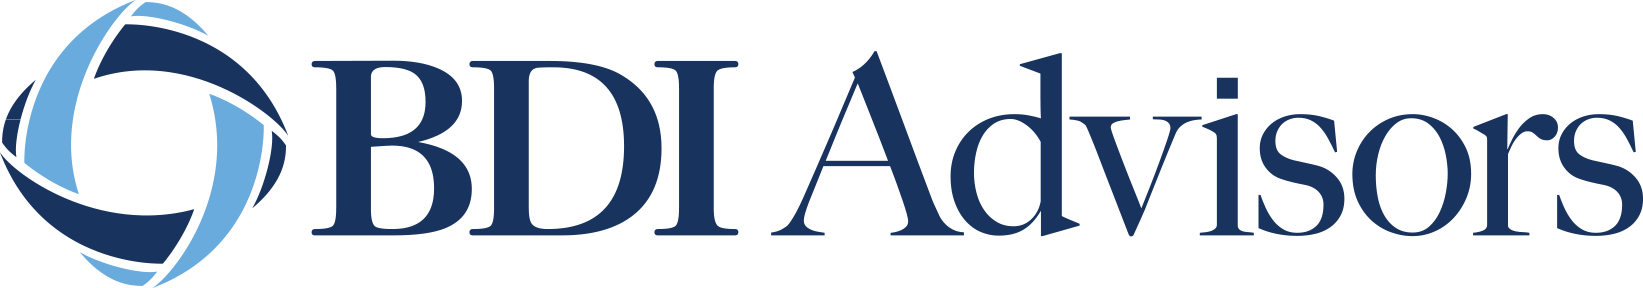 BDI Advisors logo